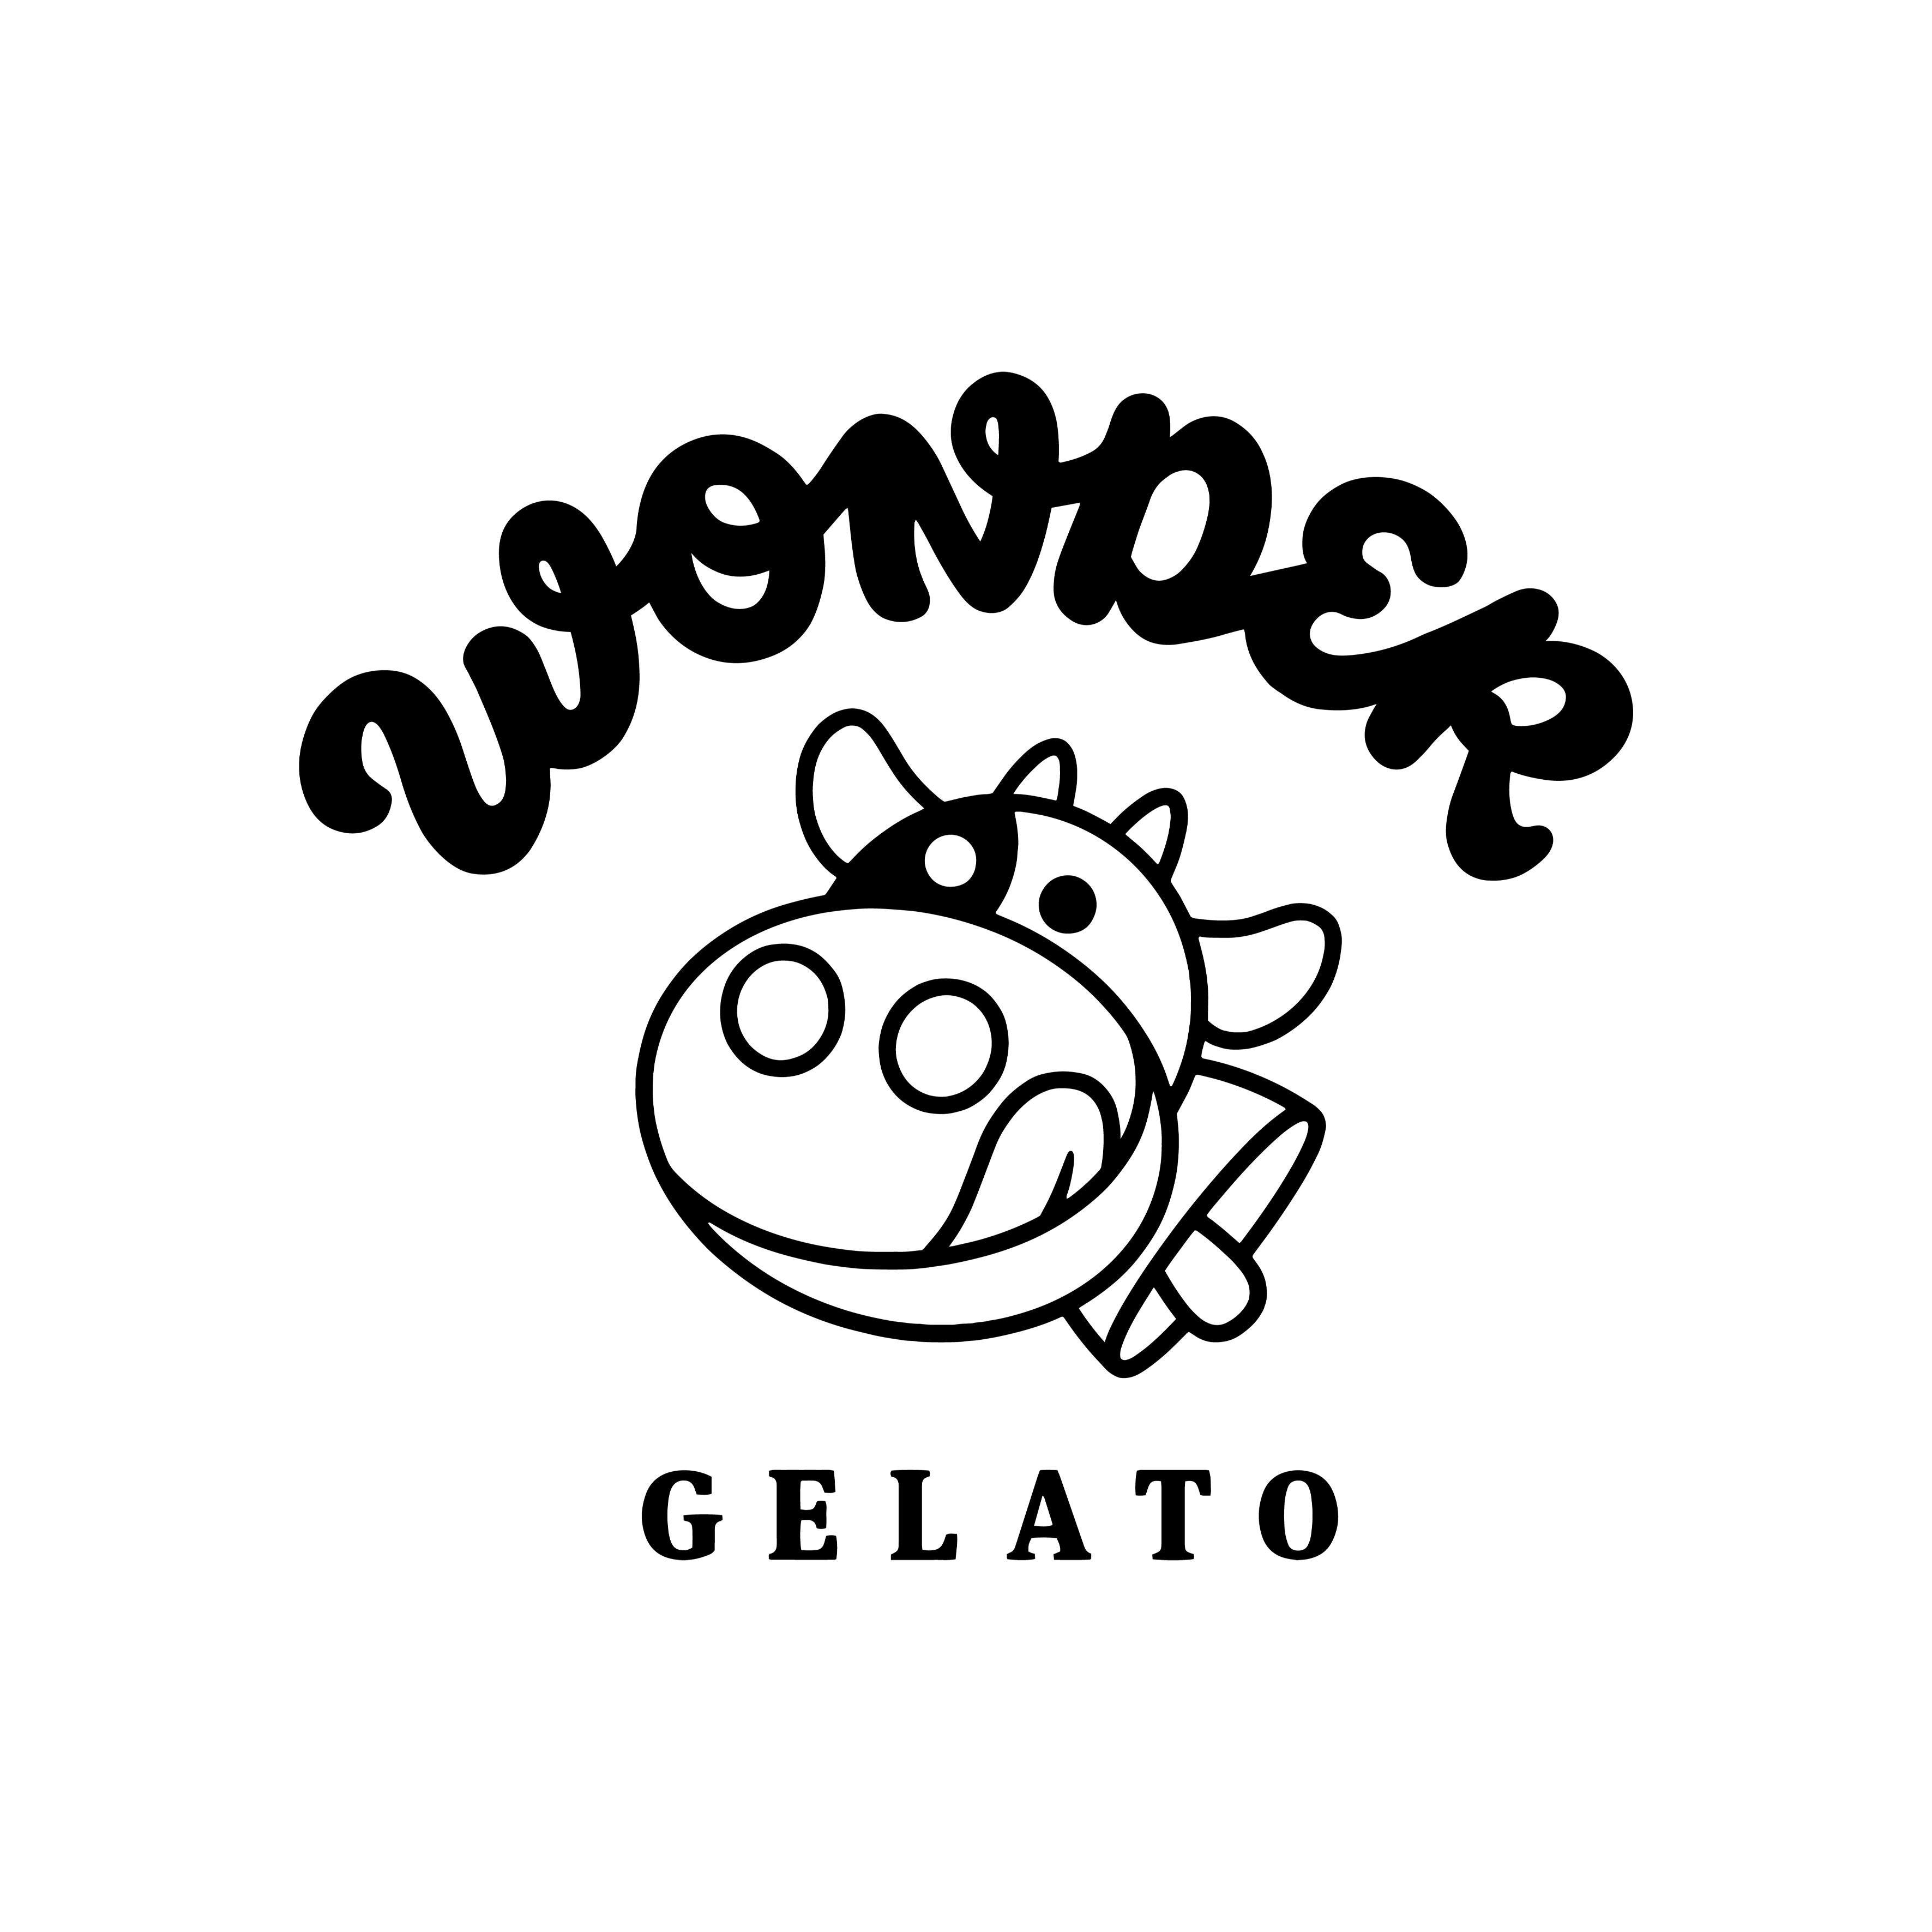 $2 Cash Voucher at Wonder Gelato - Get Deals, Cashback and Rewards with ShopBack GO